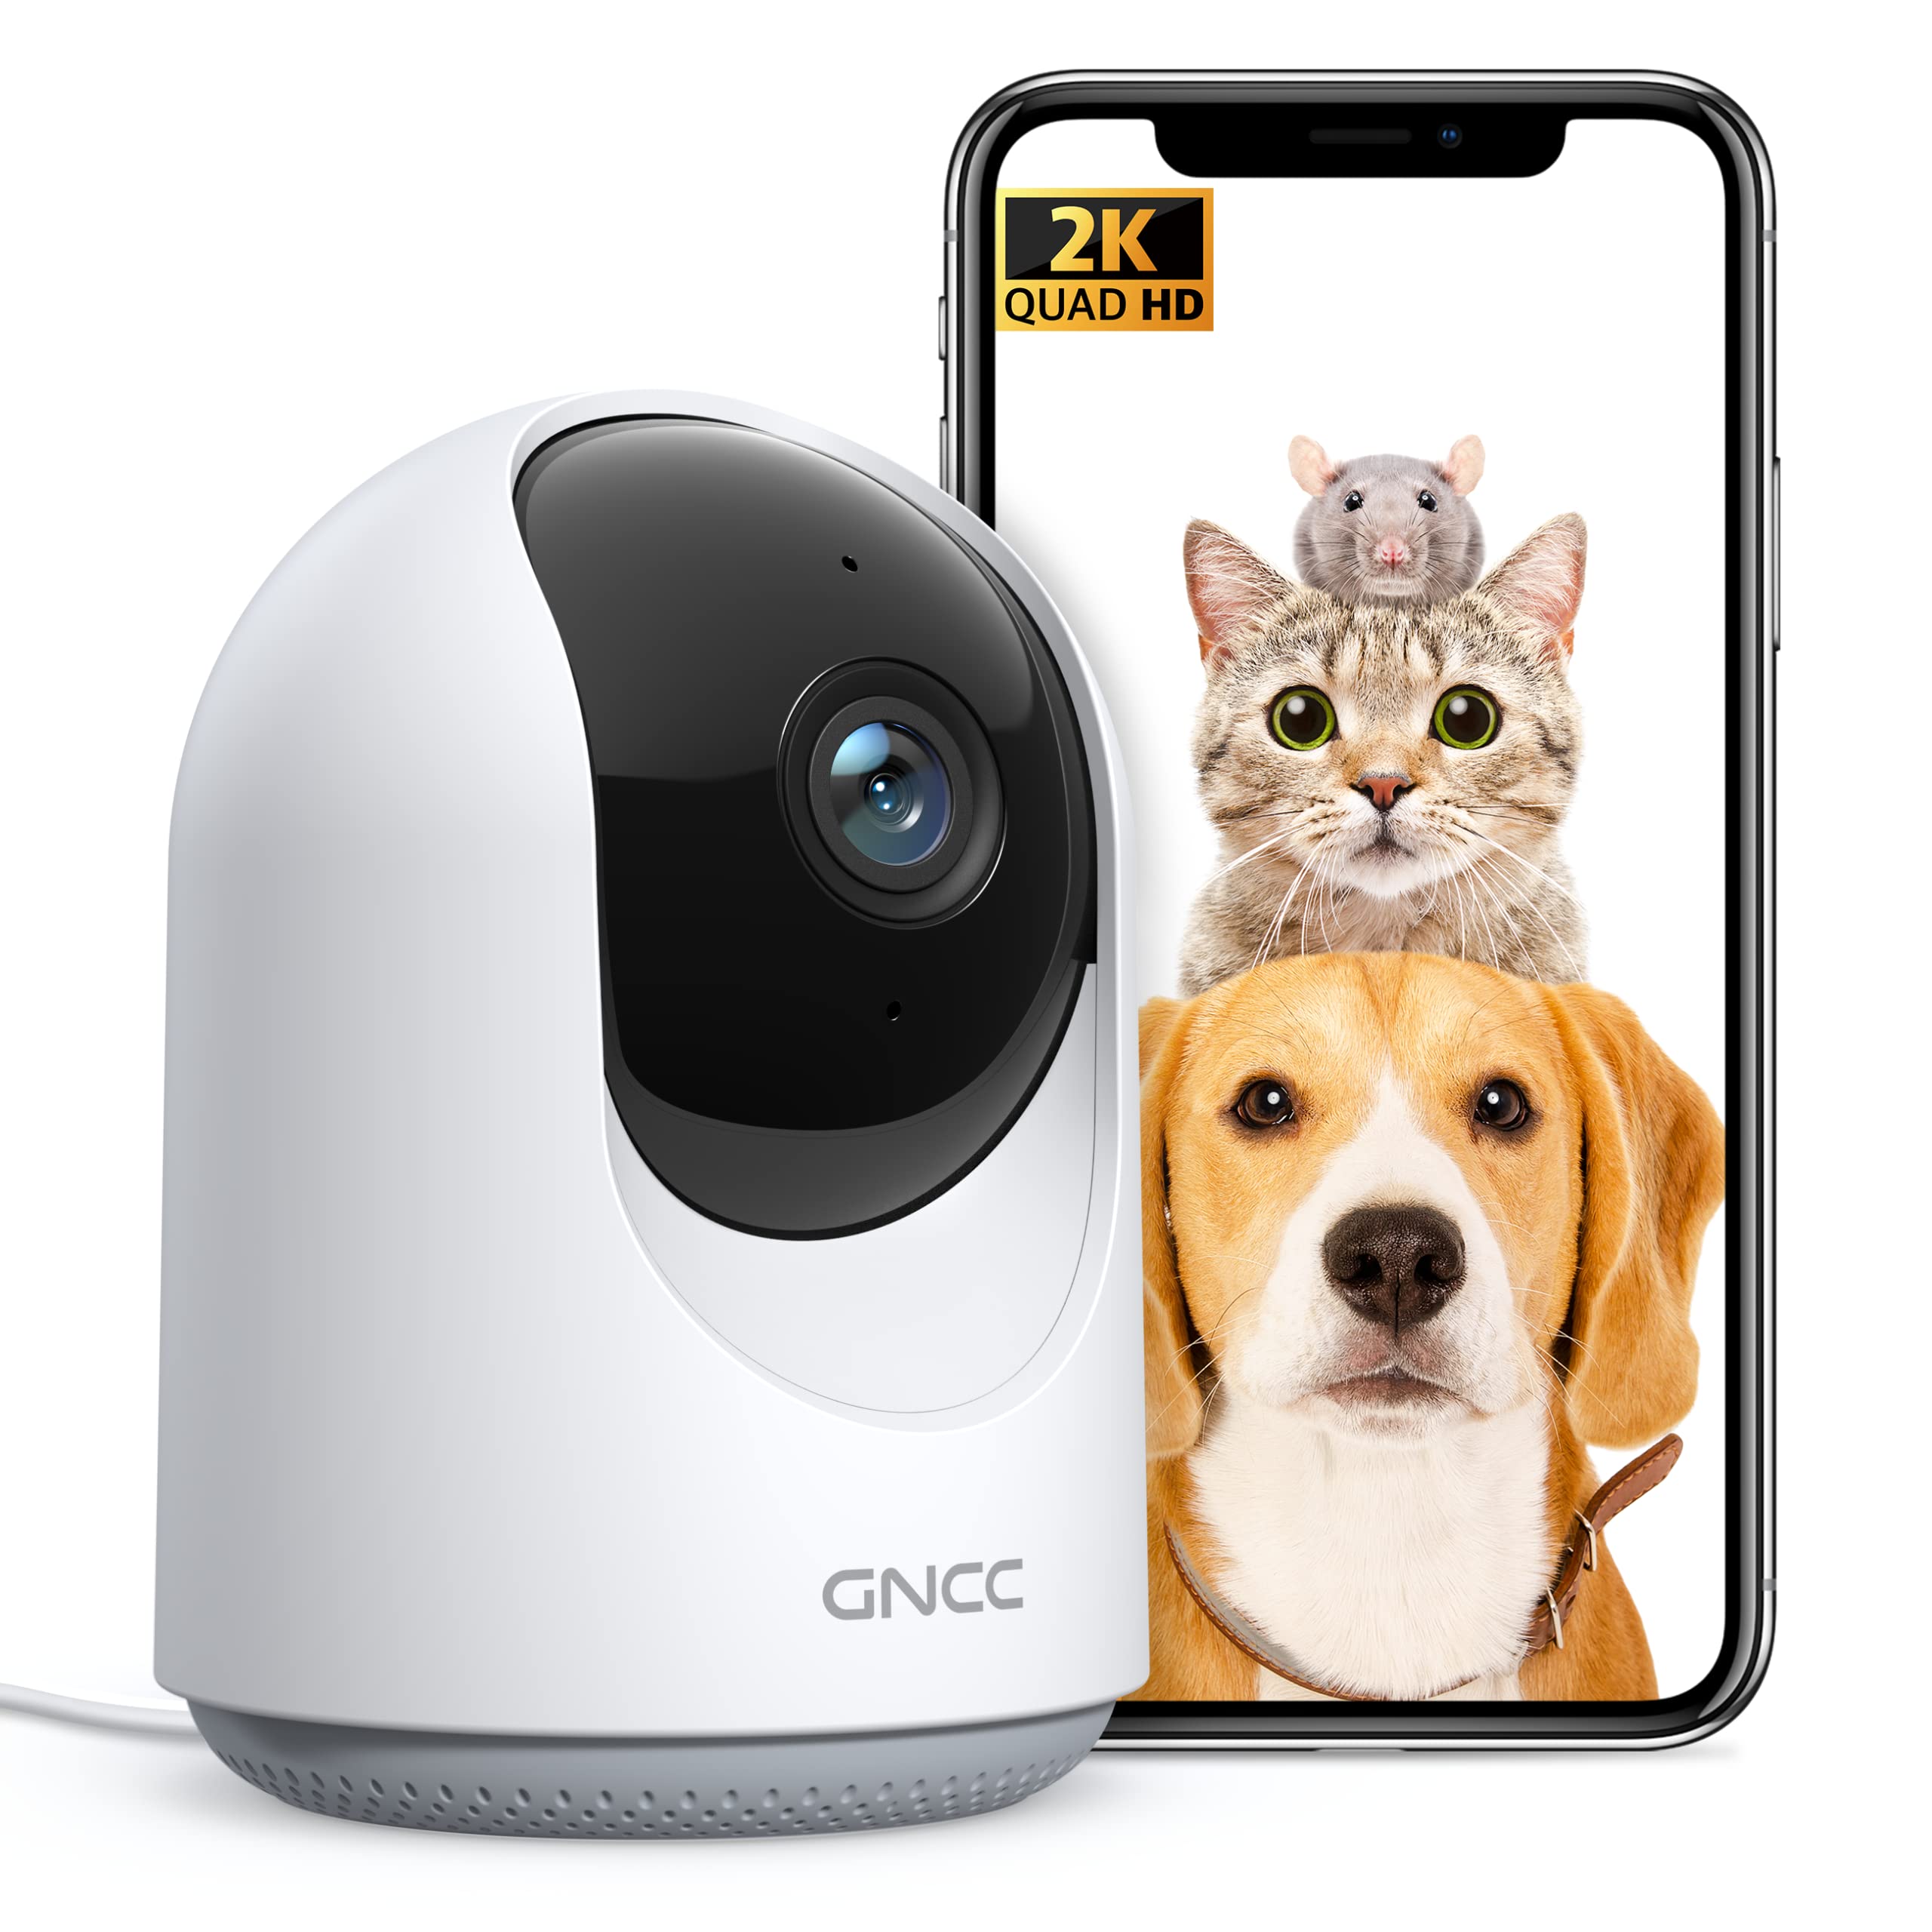 GNCC P1Pro 2k Pet Camera with Phone App